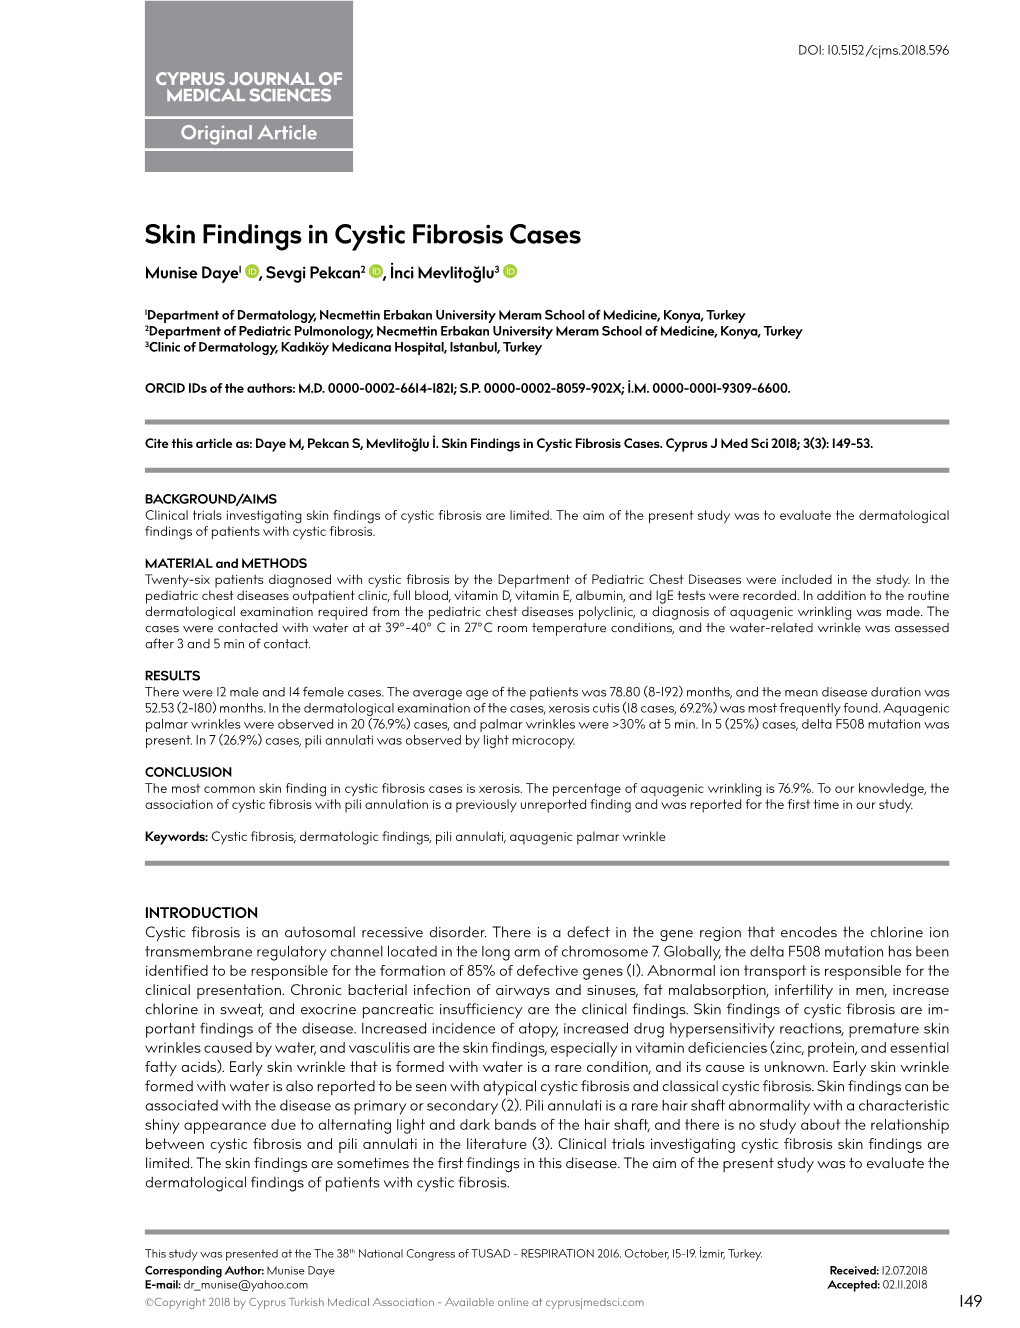 Skin Findings in Cystic Fibrosis Cases Munise Daye1 , Sevgi Pekcan2 , İnci Mevlitoğlu3